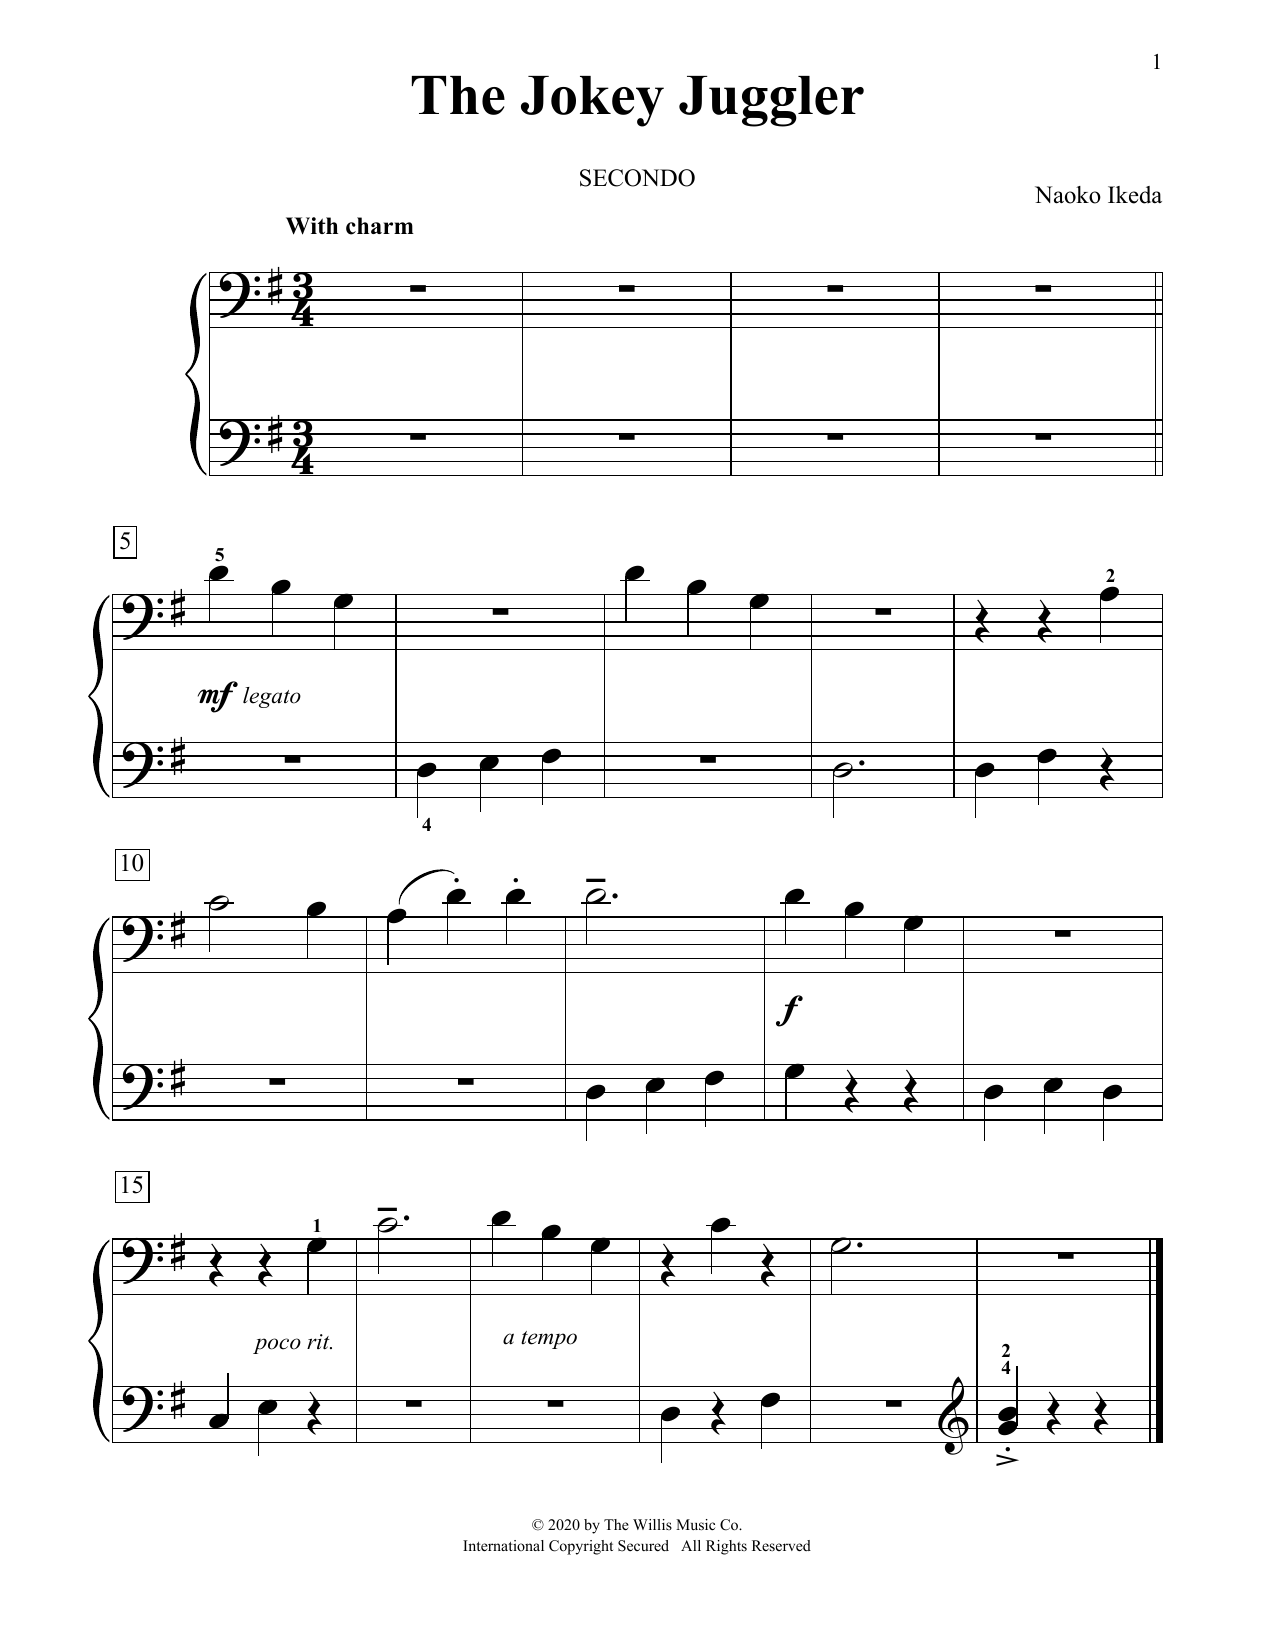 Naoko Ikeda The Jokey Juggler Sheet Music Notes & Chords for Piano Duet - Download or Print PDF